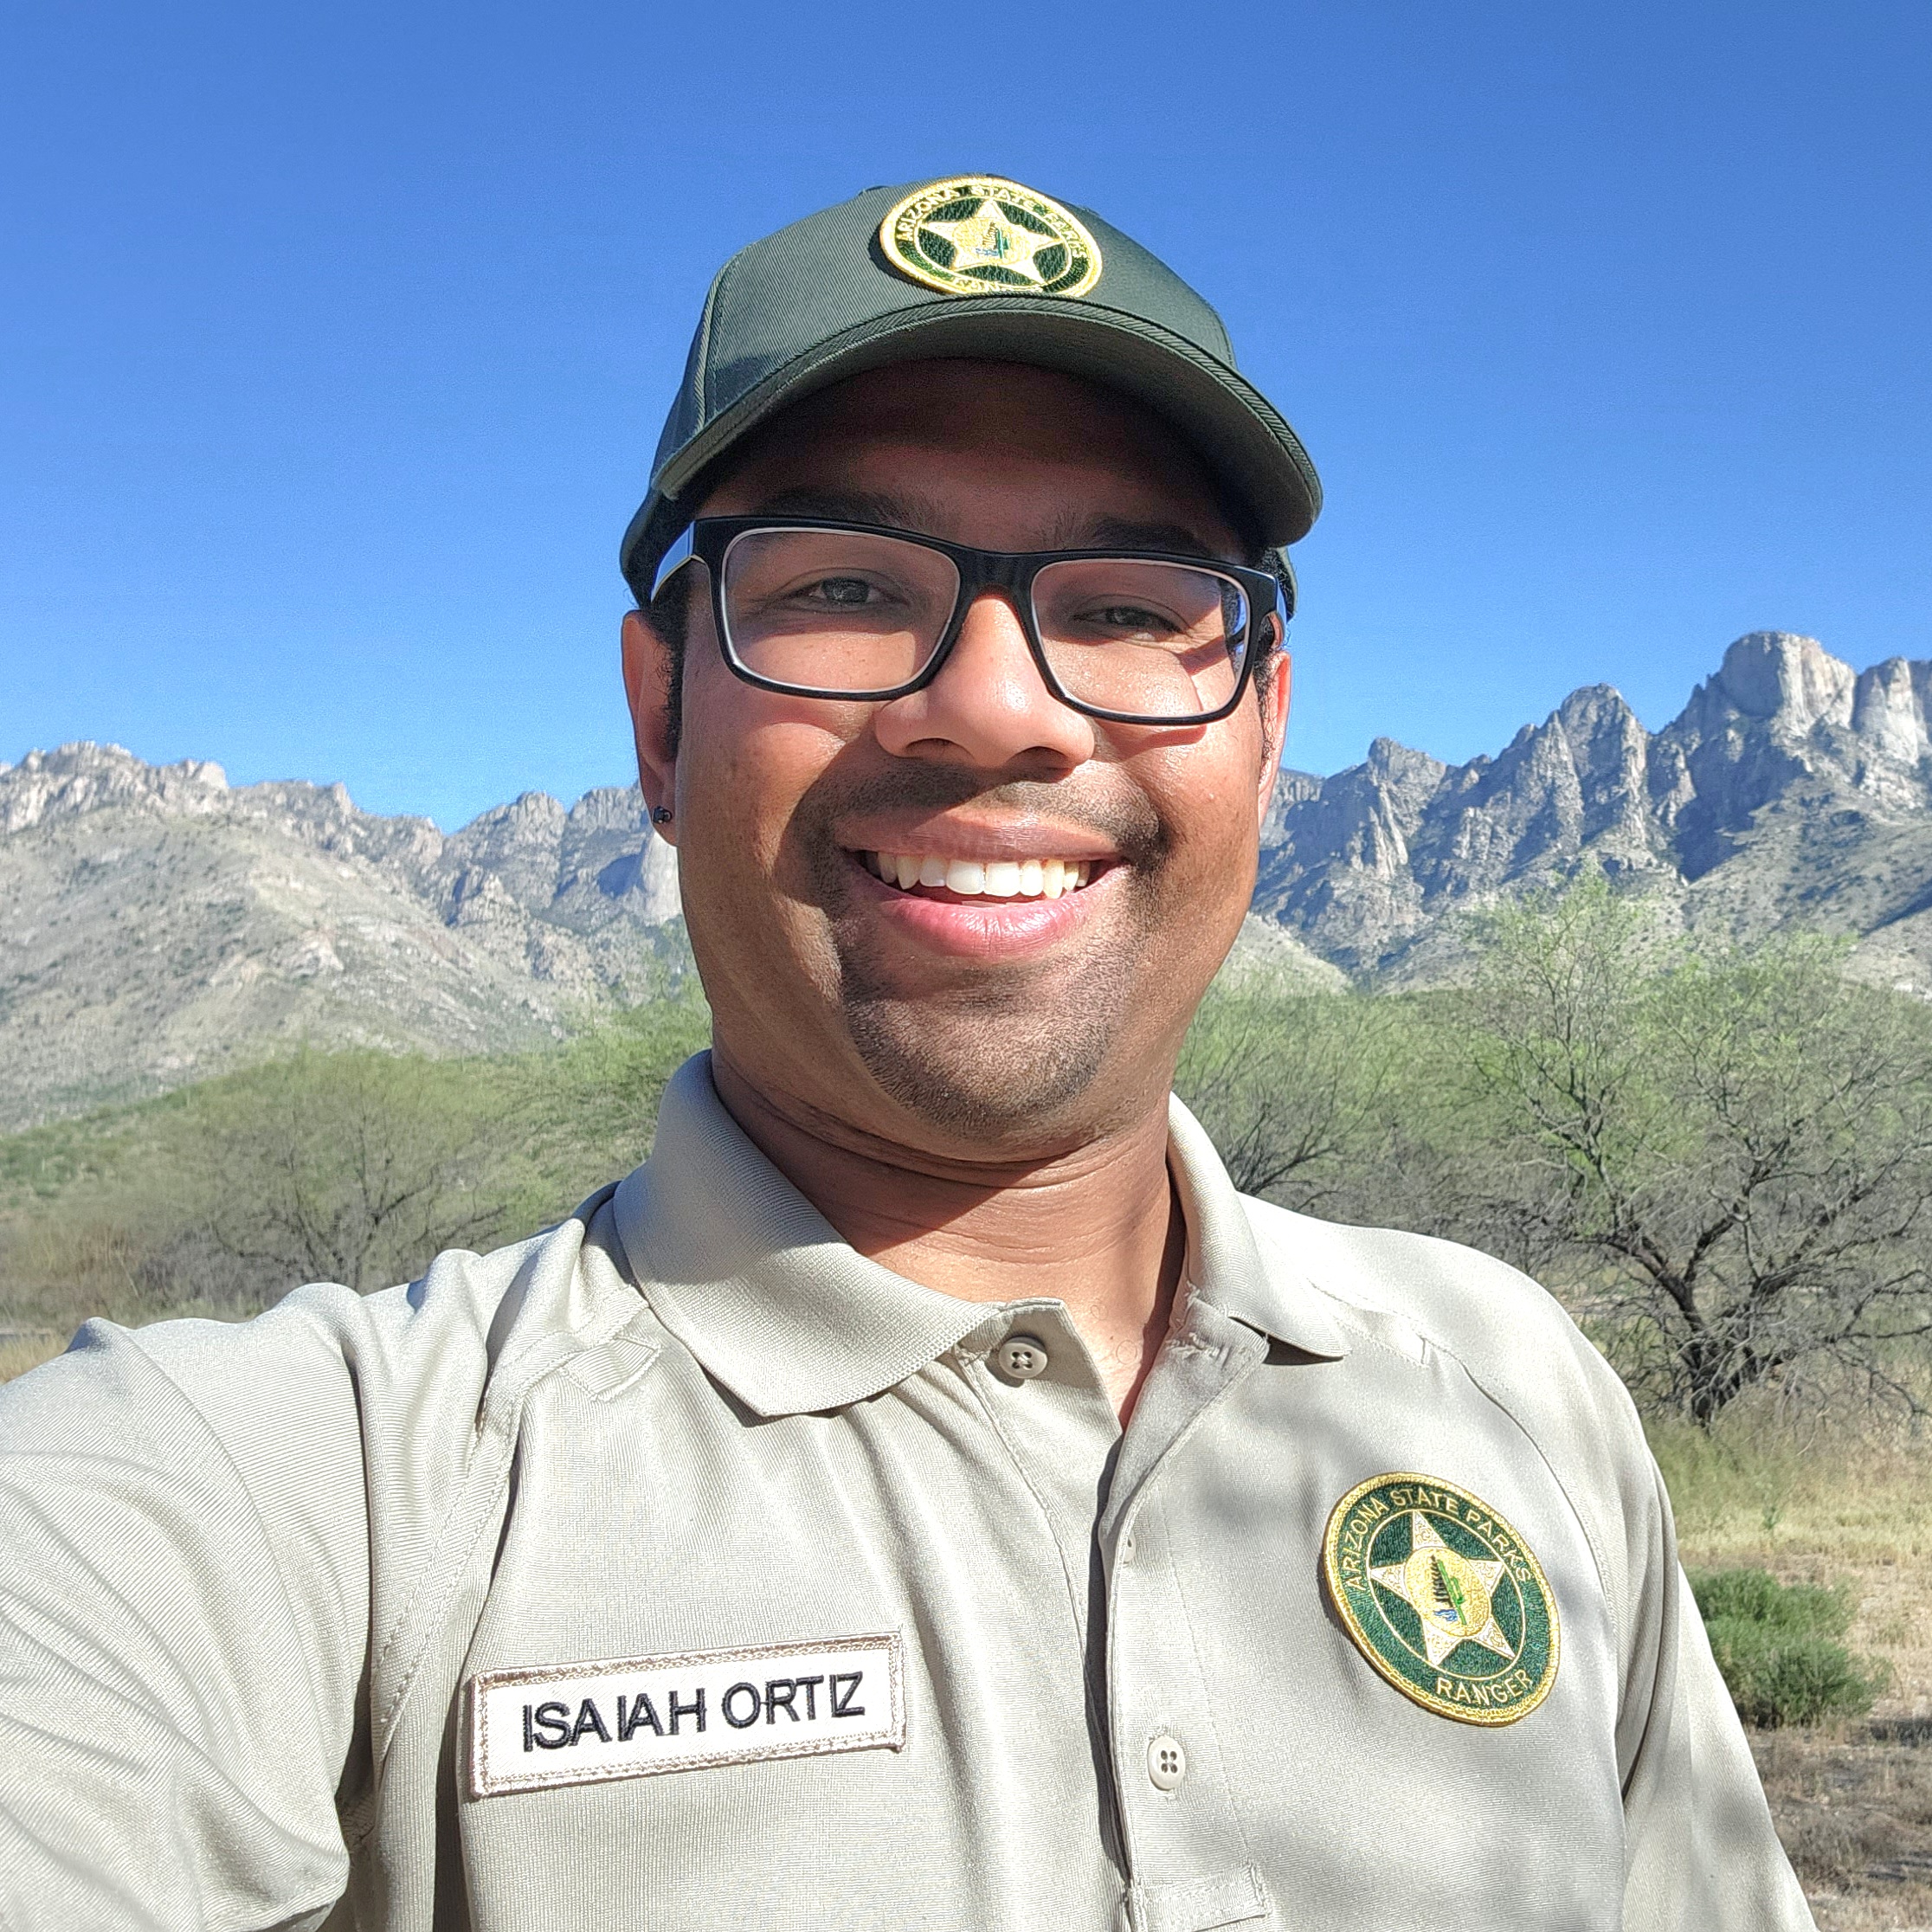 AZ State Parks ranger, Isaiah Ortiz